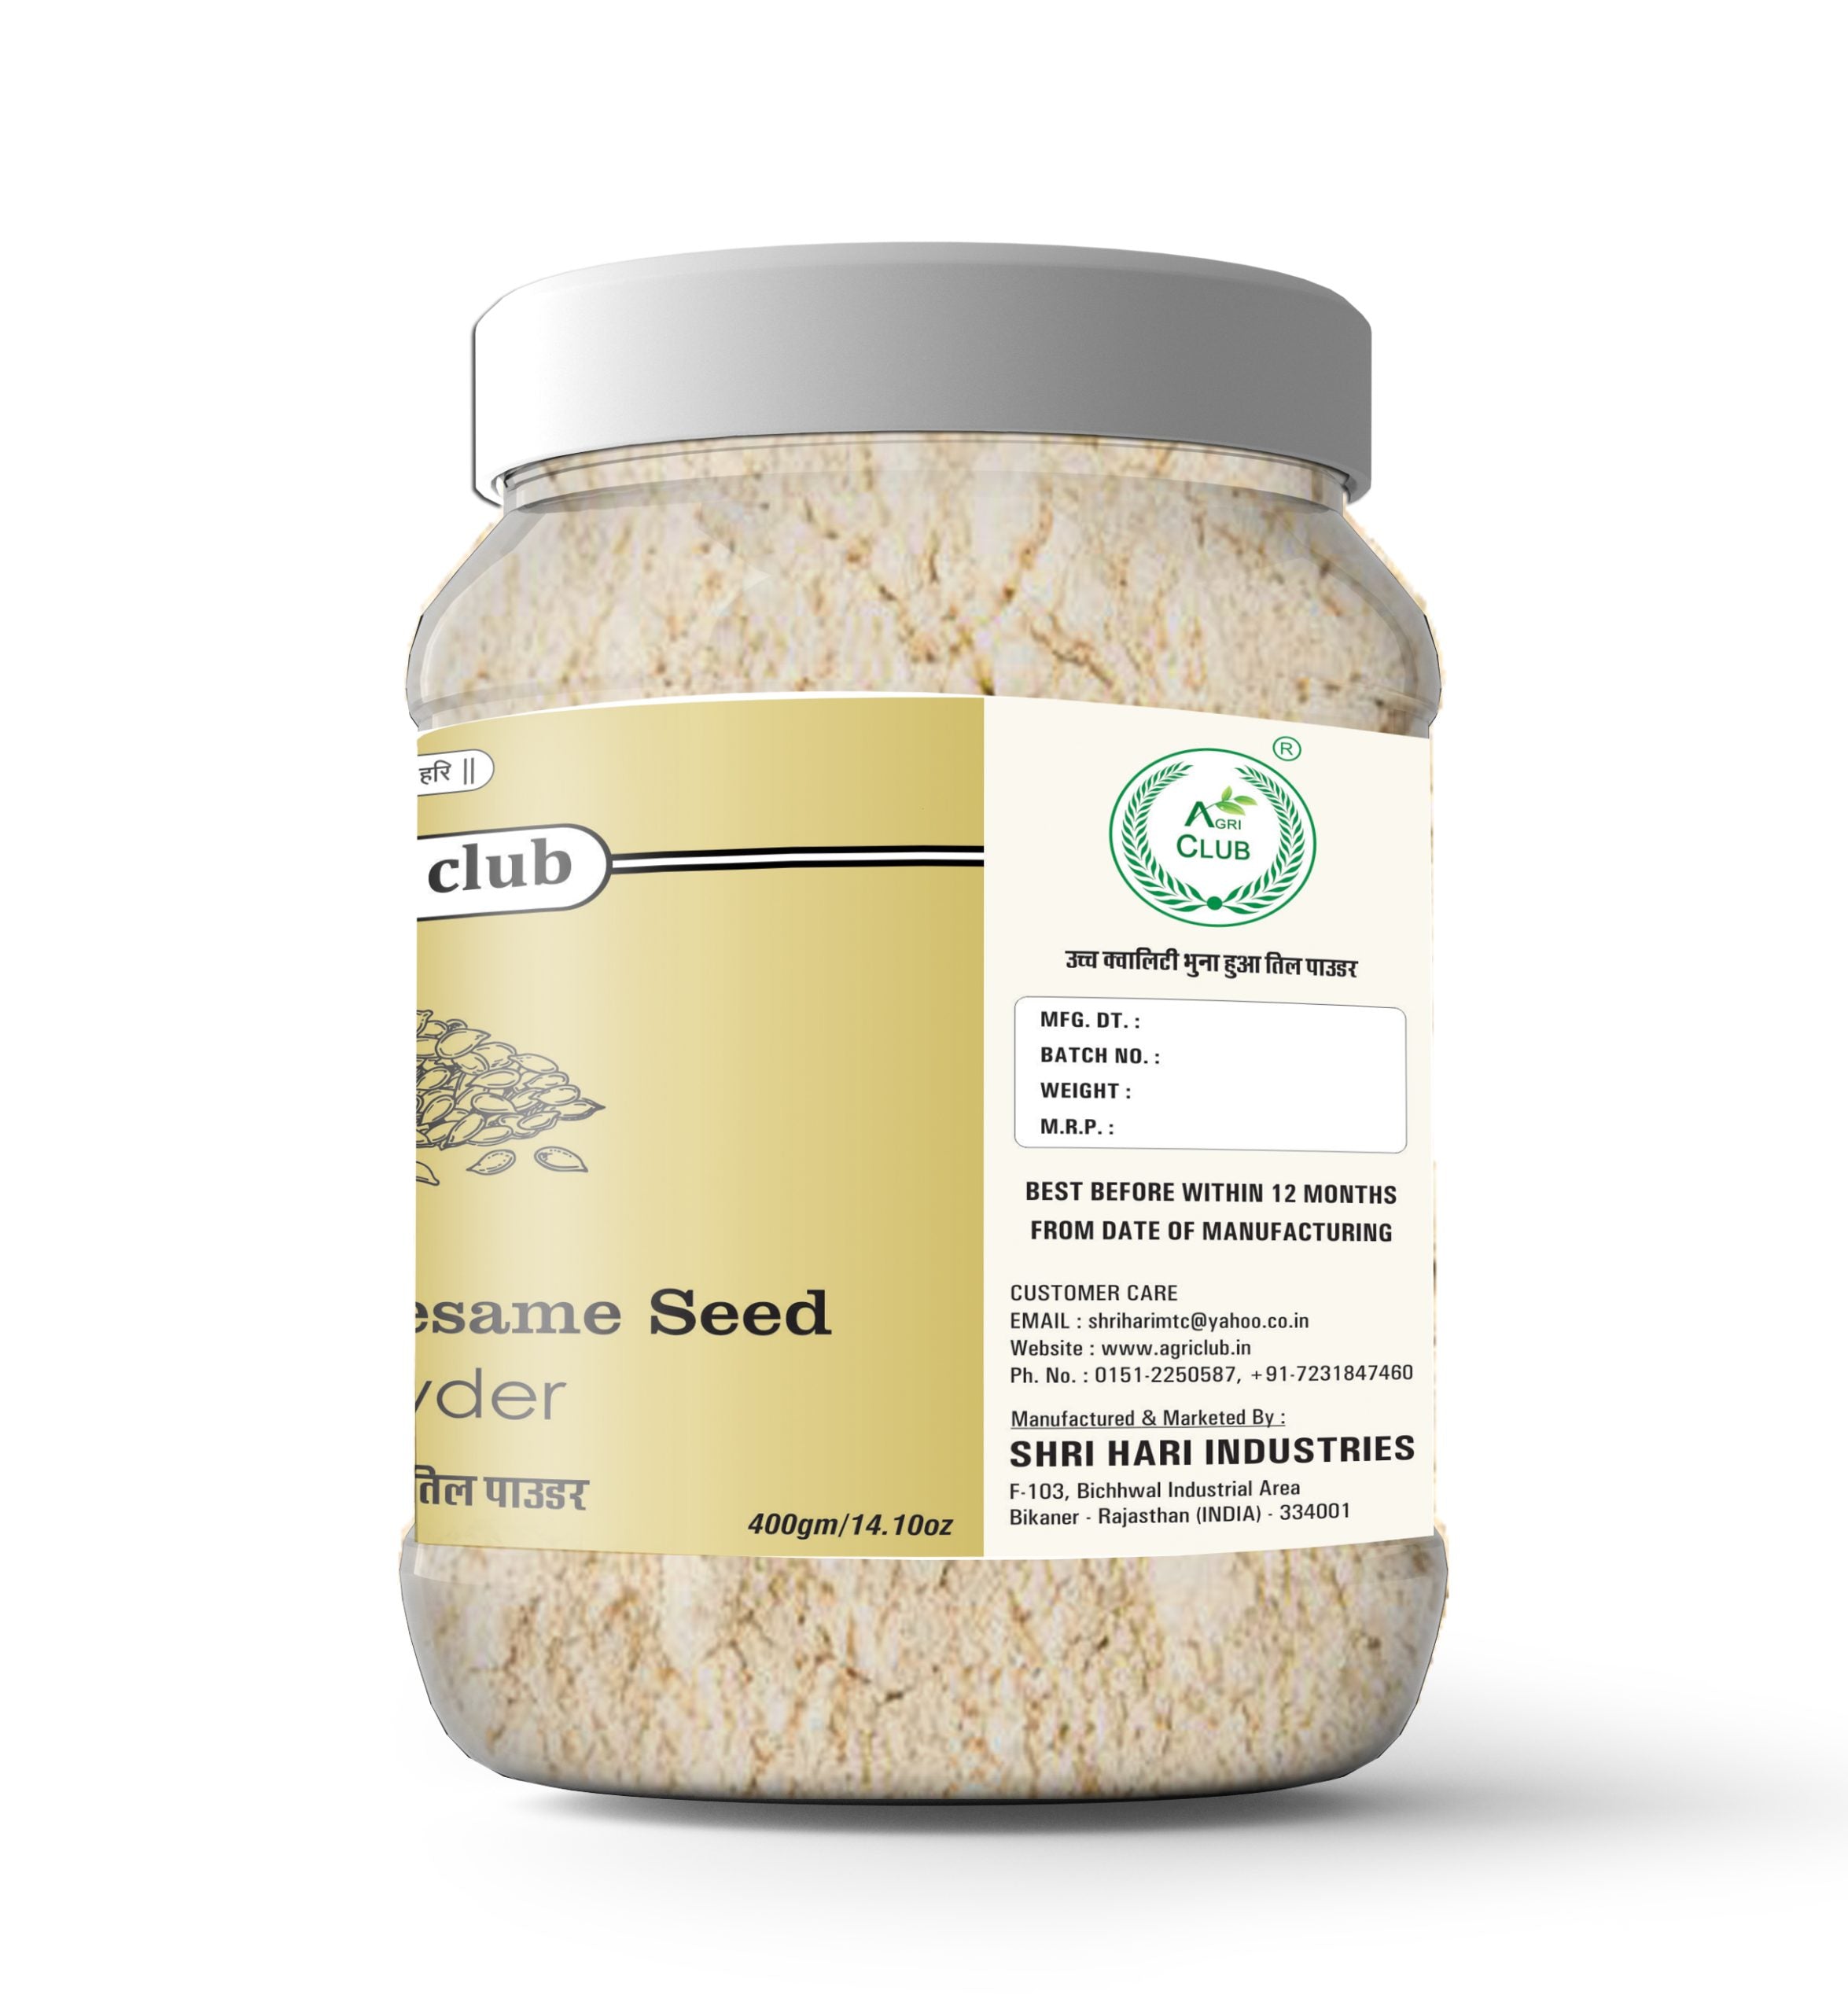 Roasted Sesame Seed Powder Premium Quality 400 GM